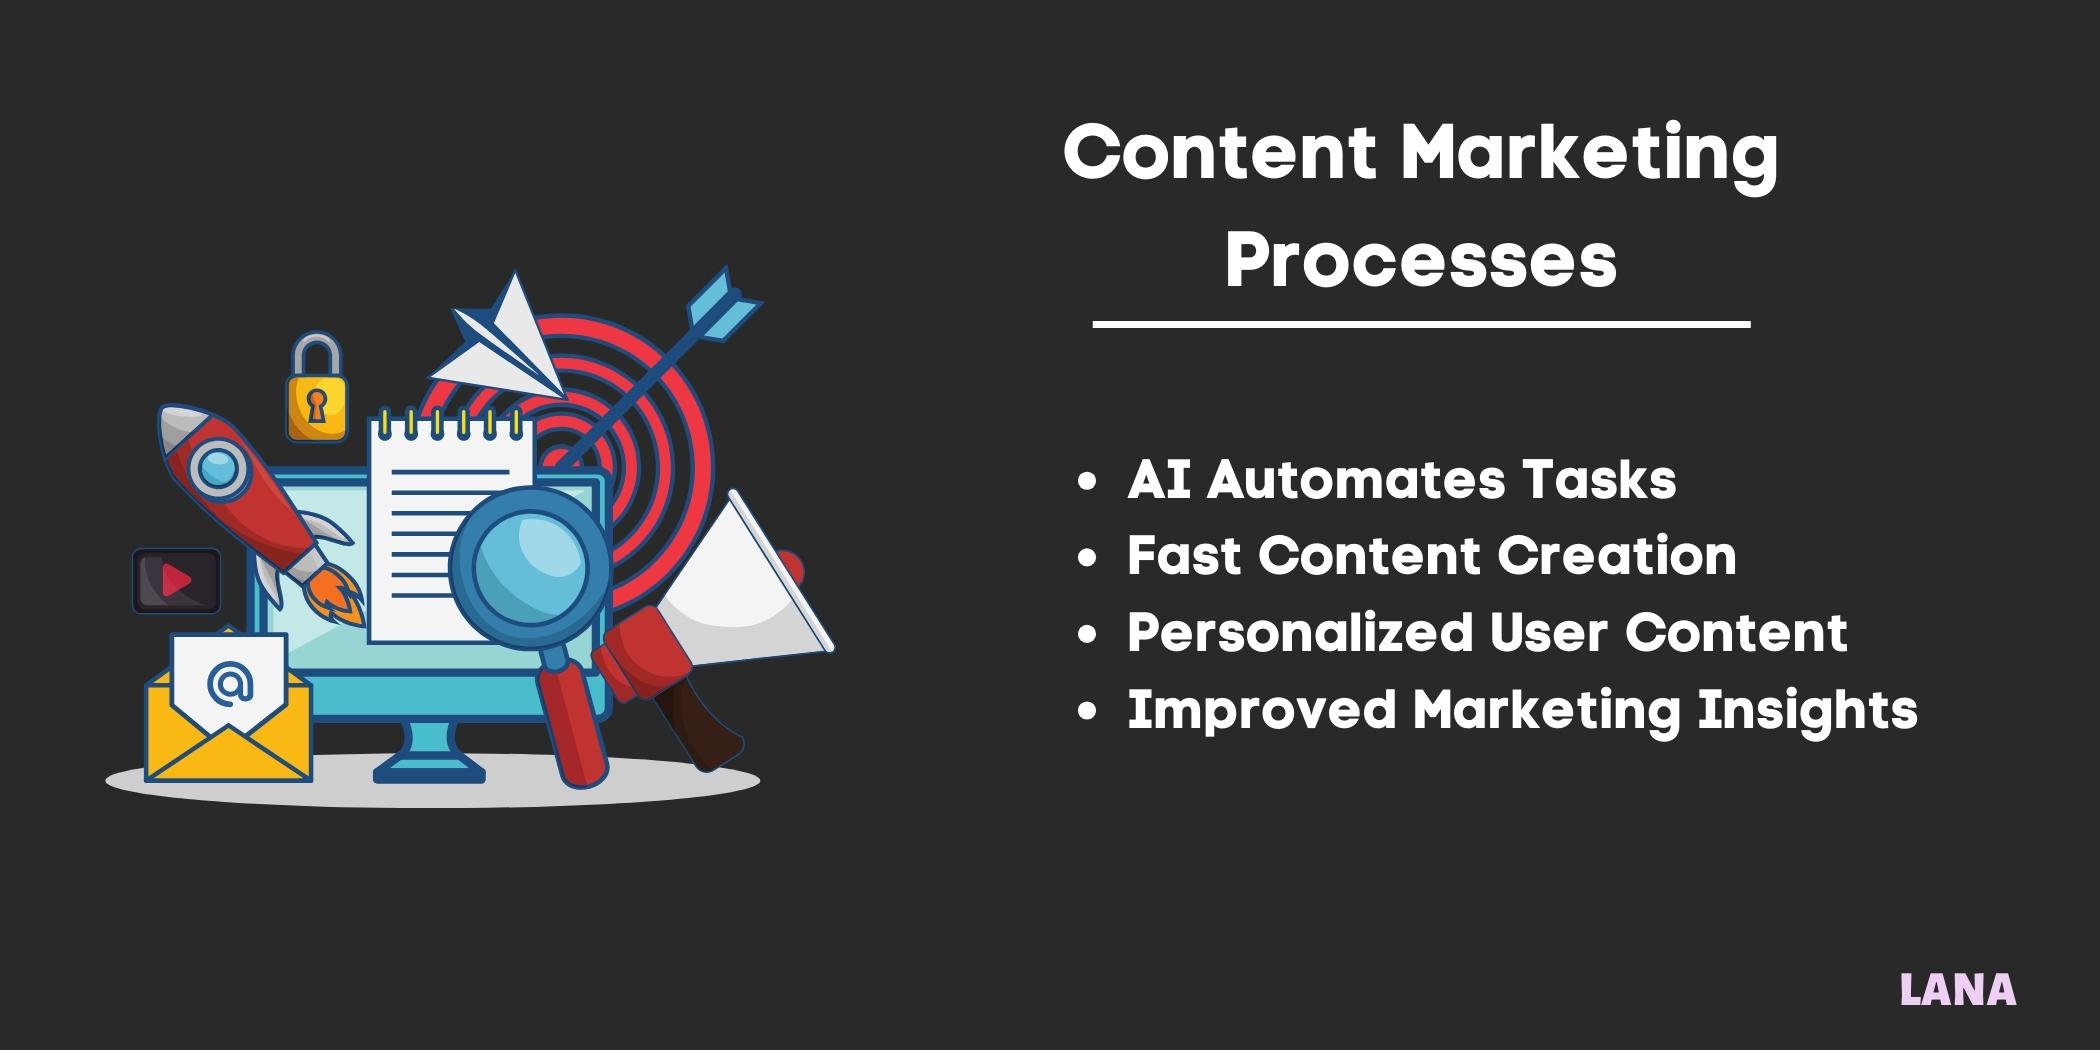  Streamline the Content Marketing Processes